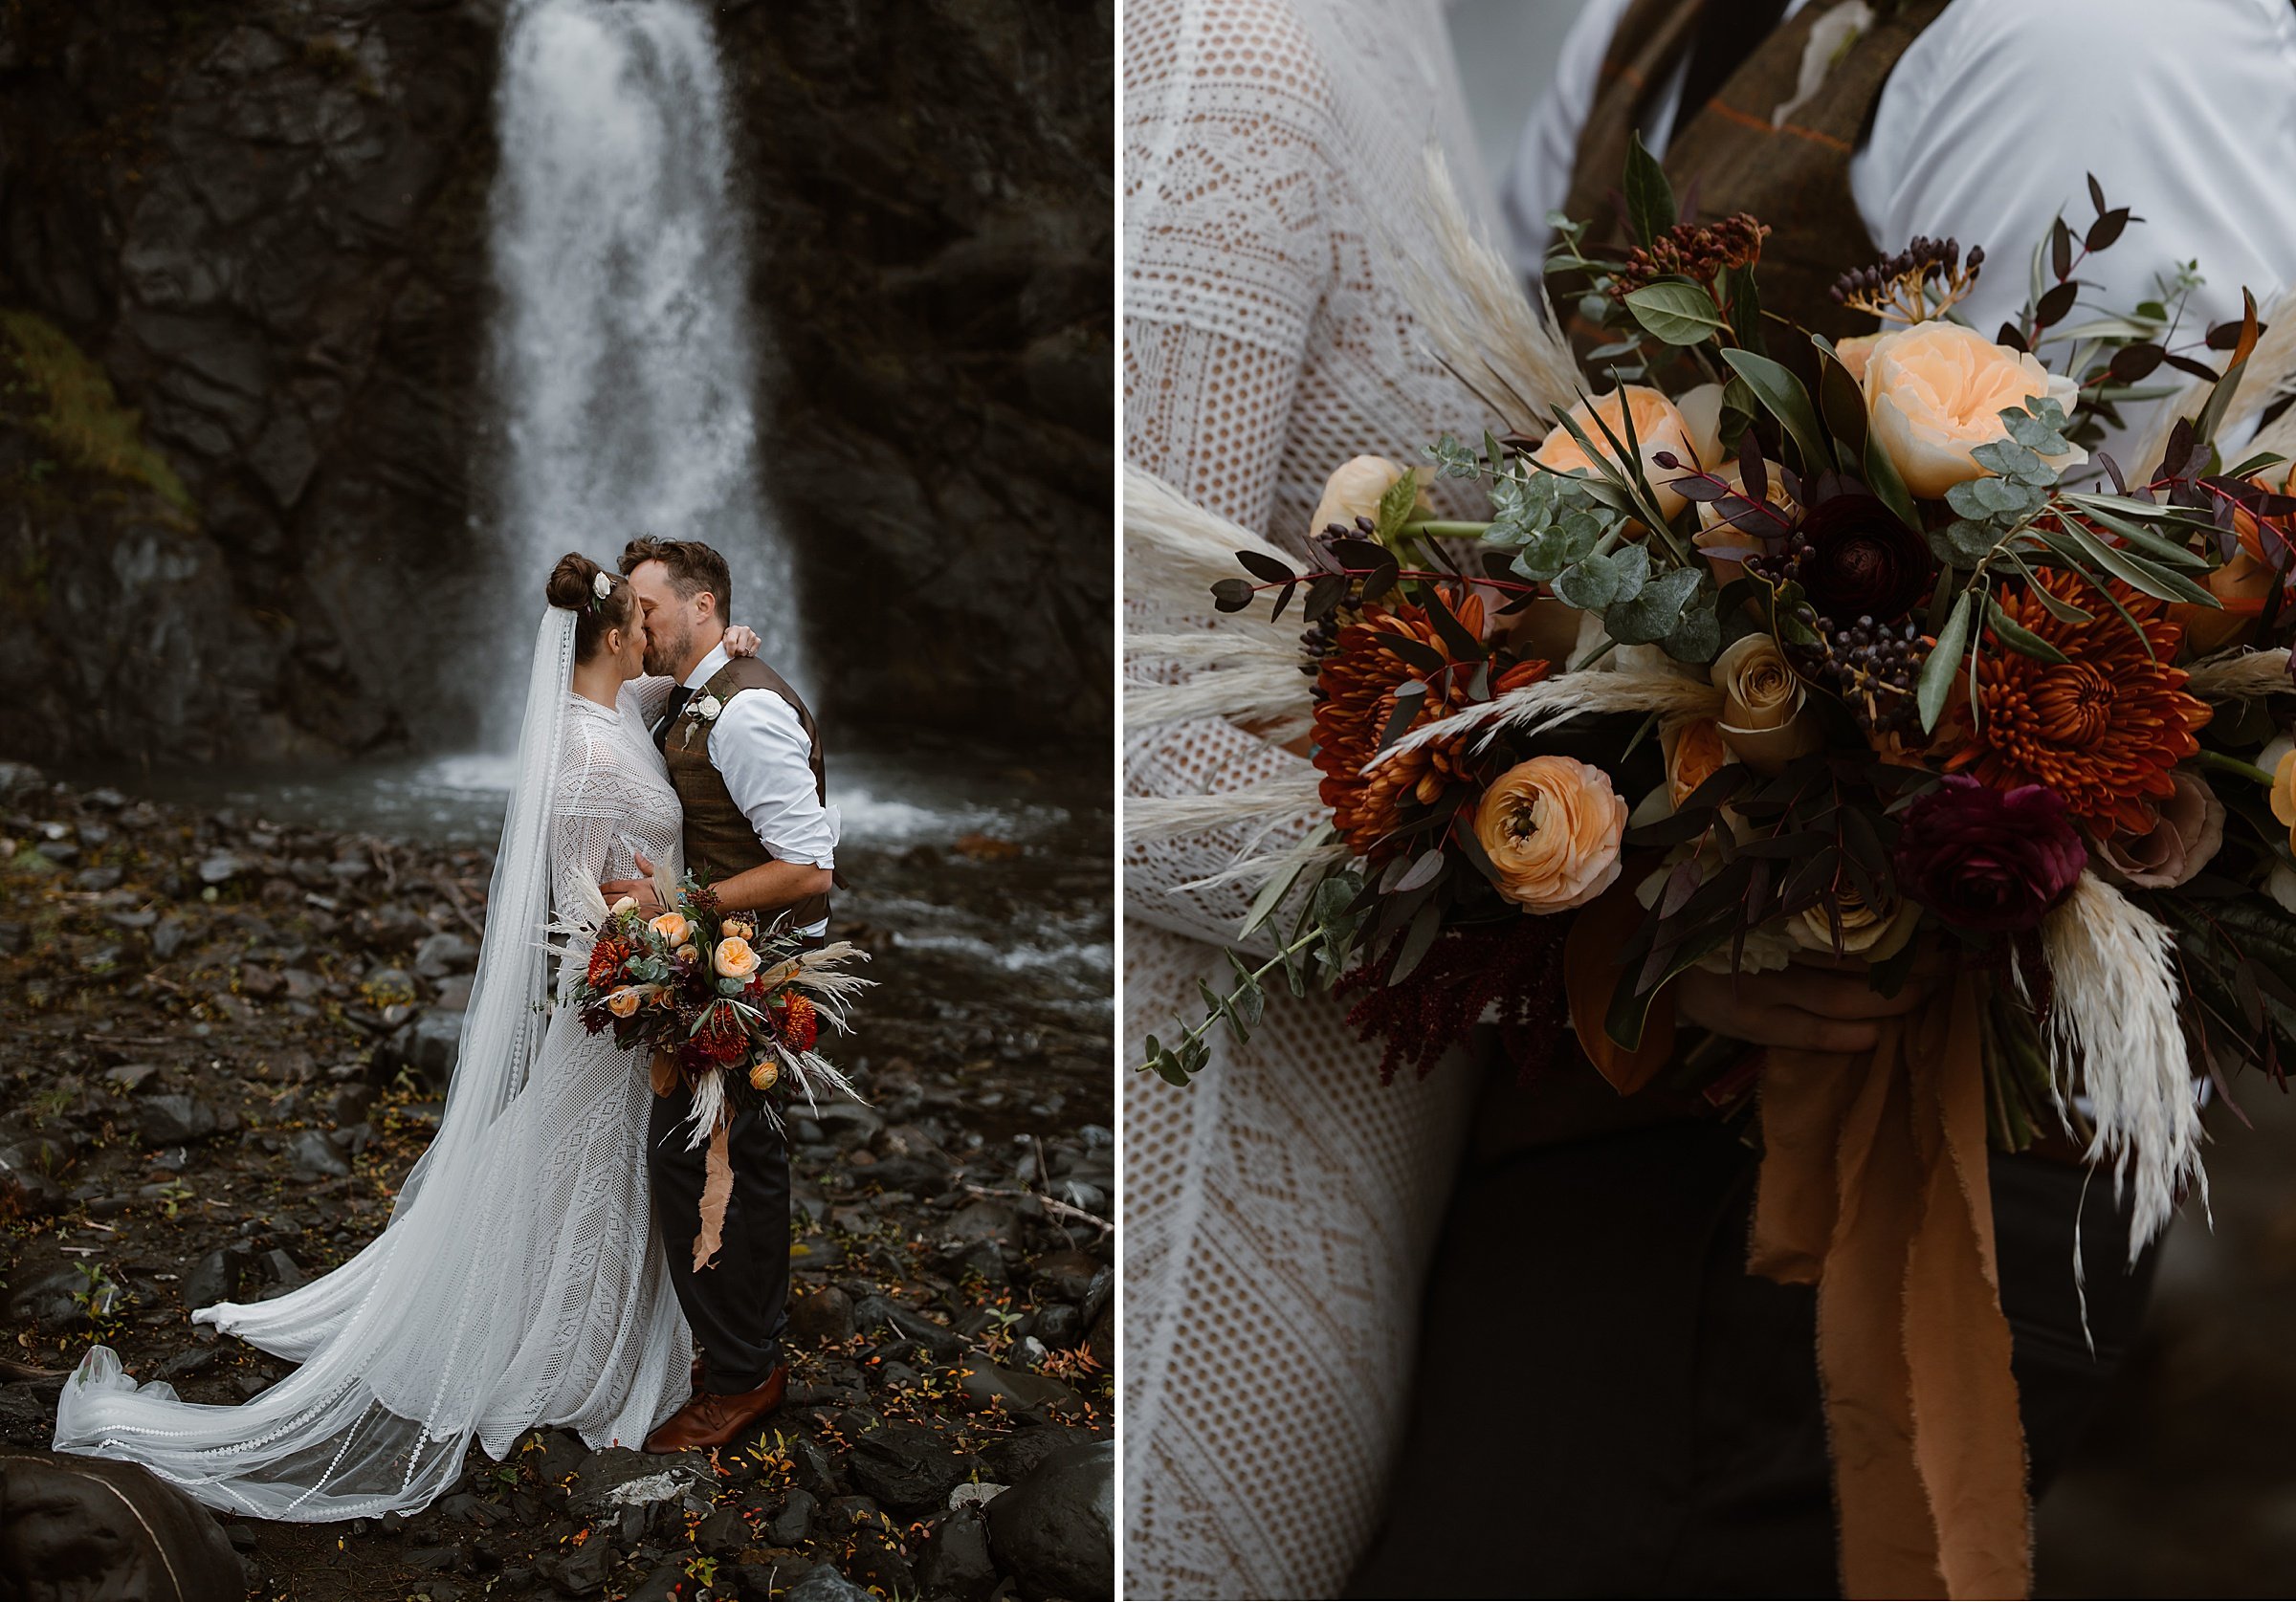  autumn elopement inspiration by waterfall 